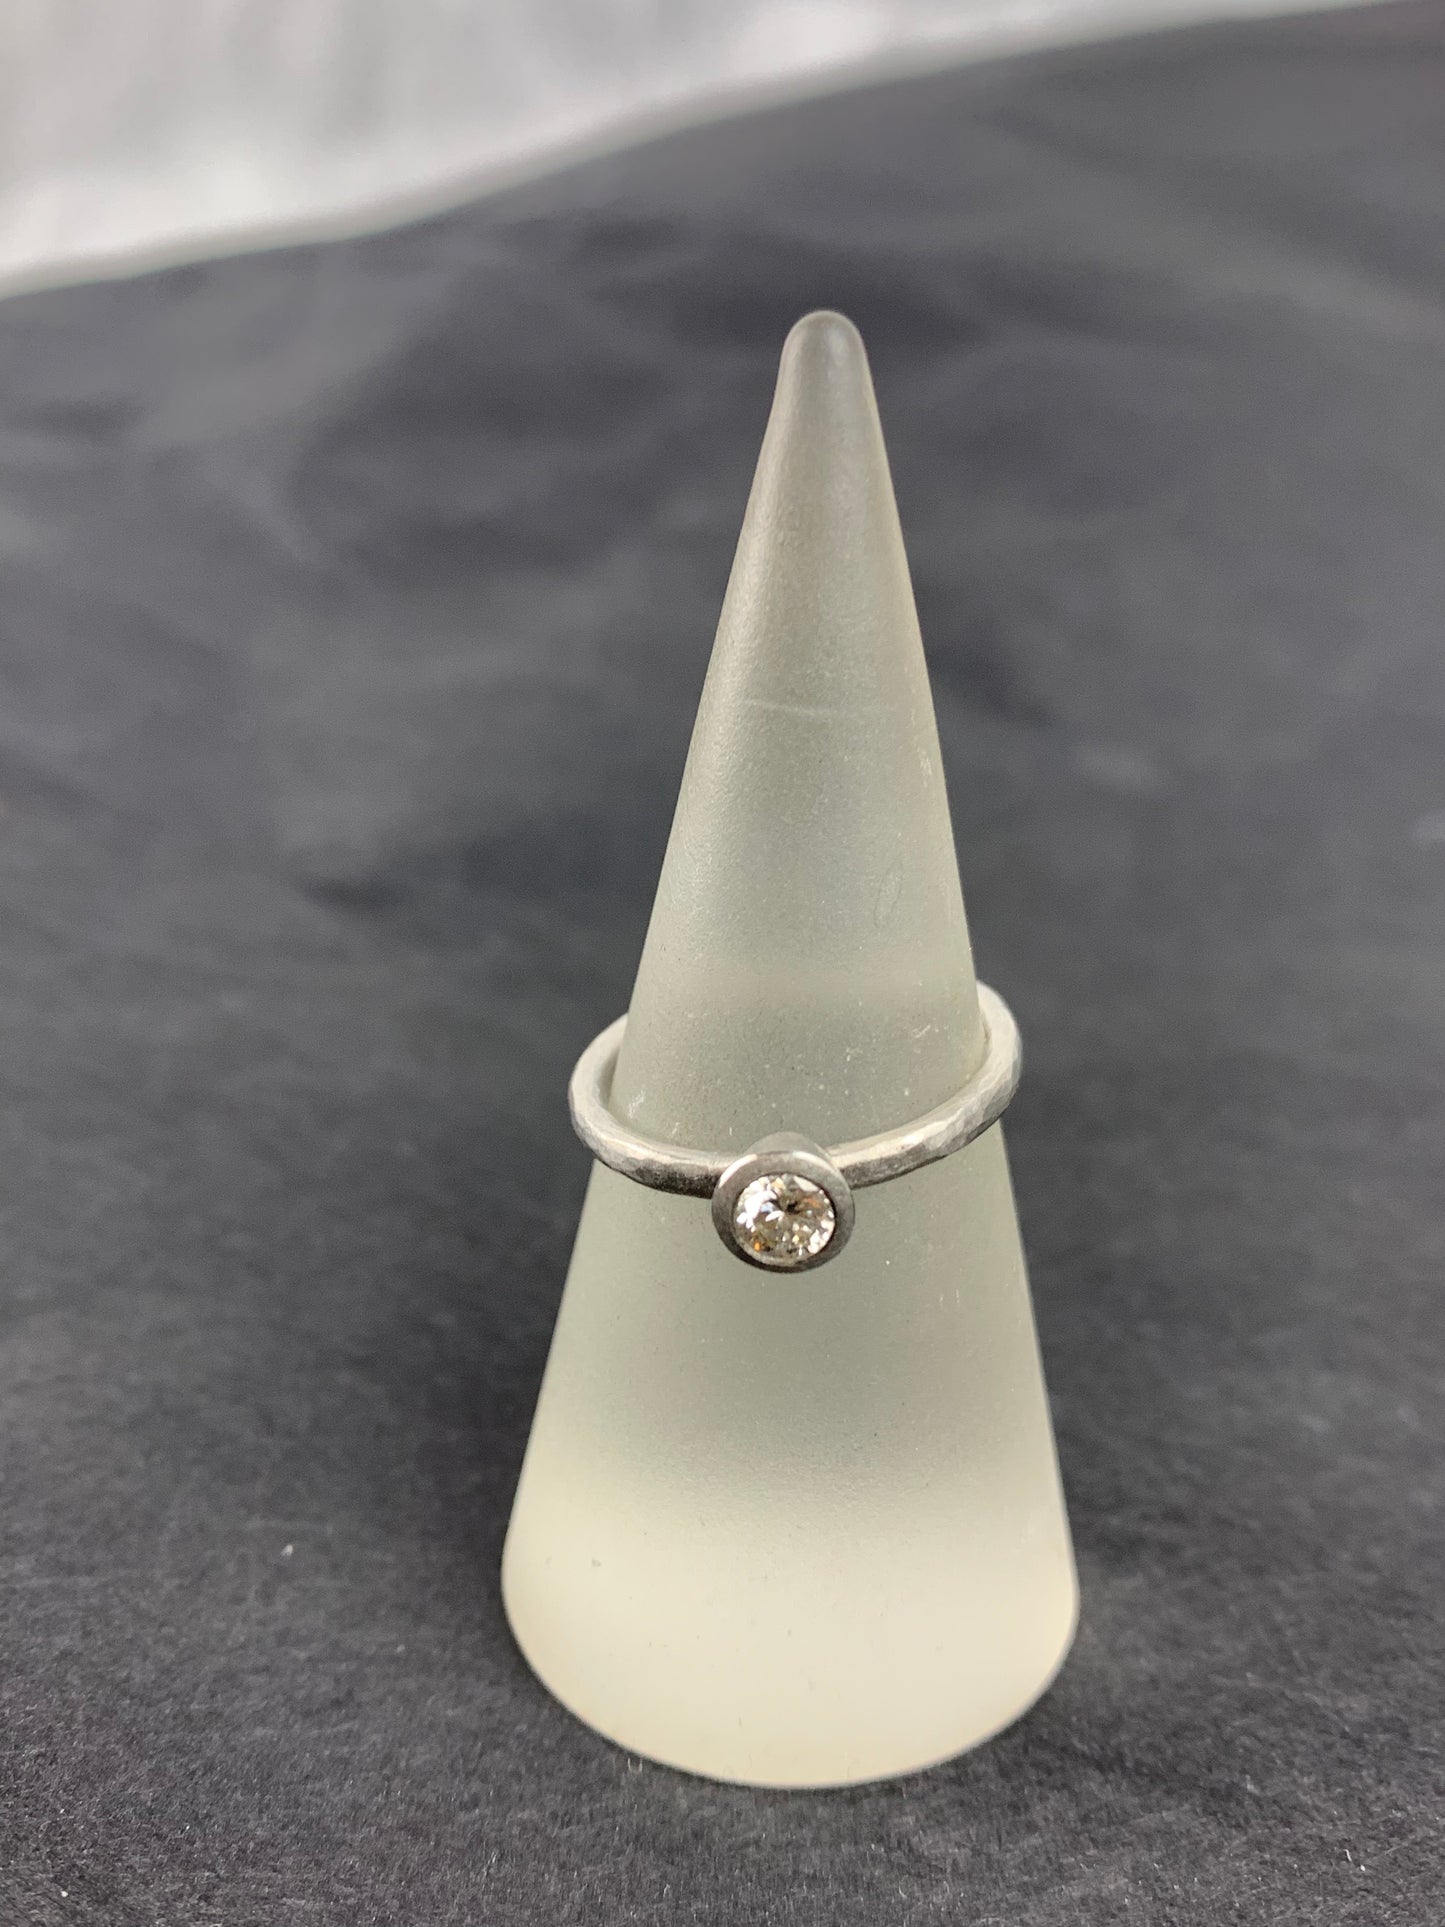 Betts, Malcolm - Platinum Ring with Round Brilliant Cut Diamond, Size L1/2